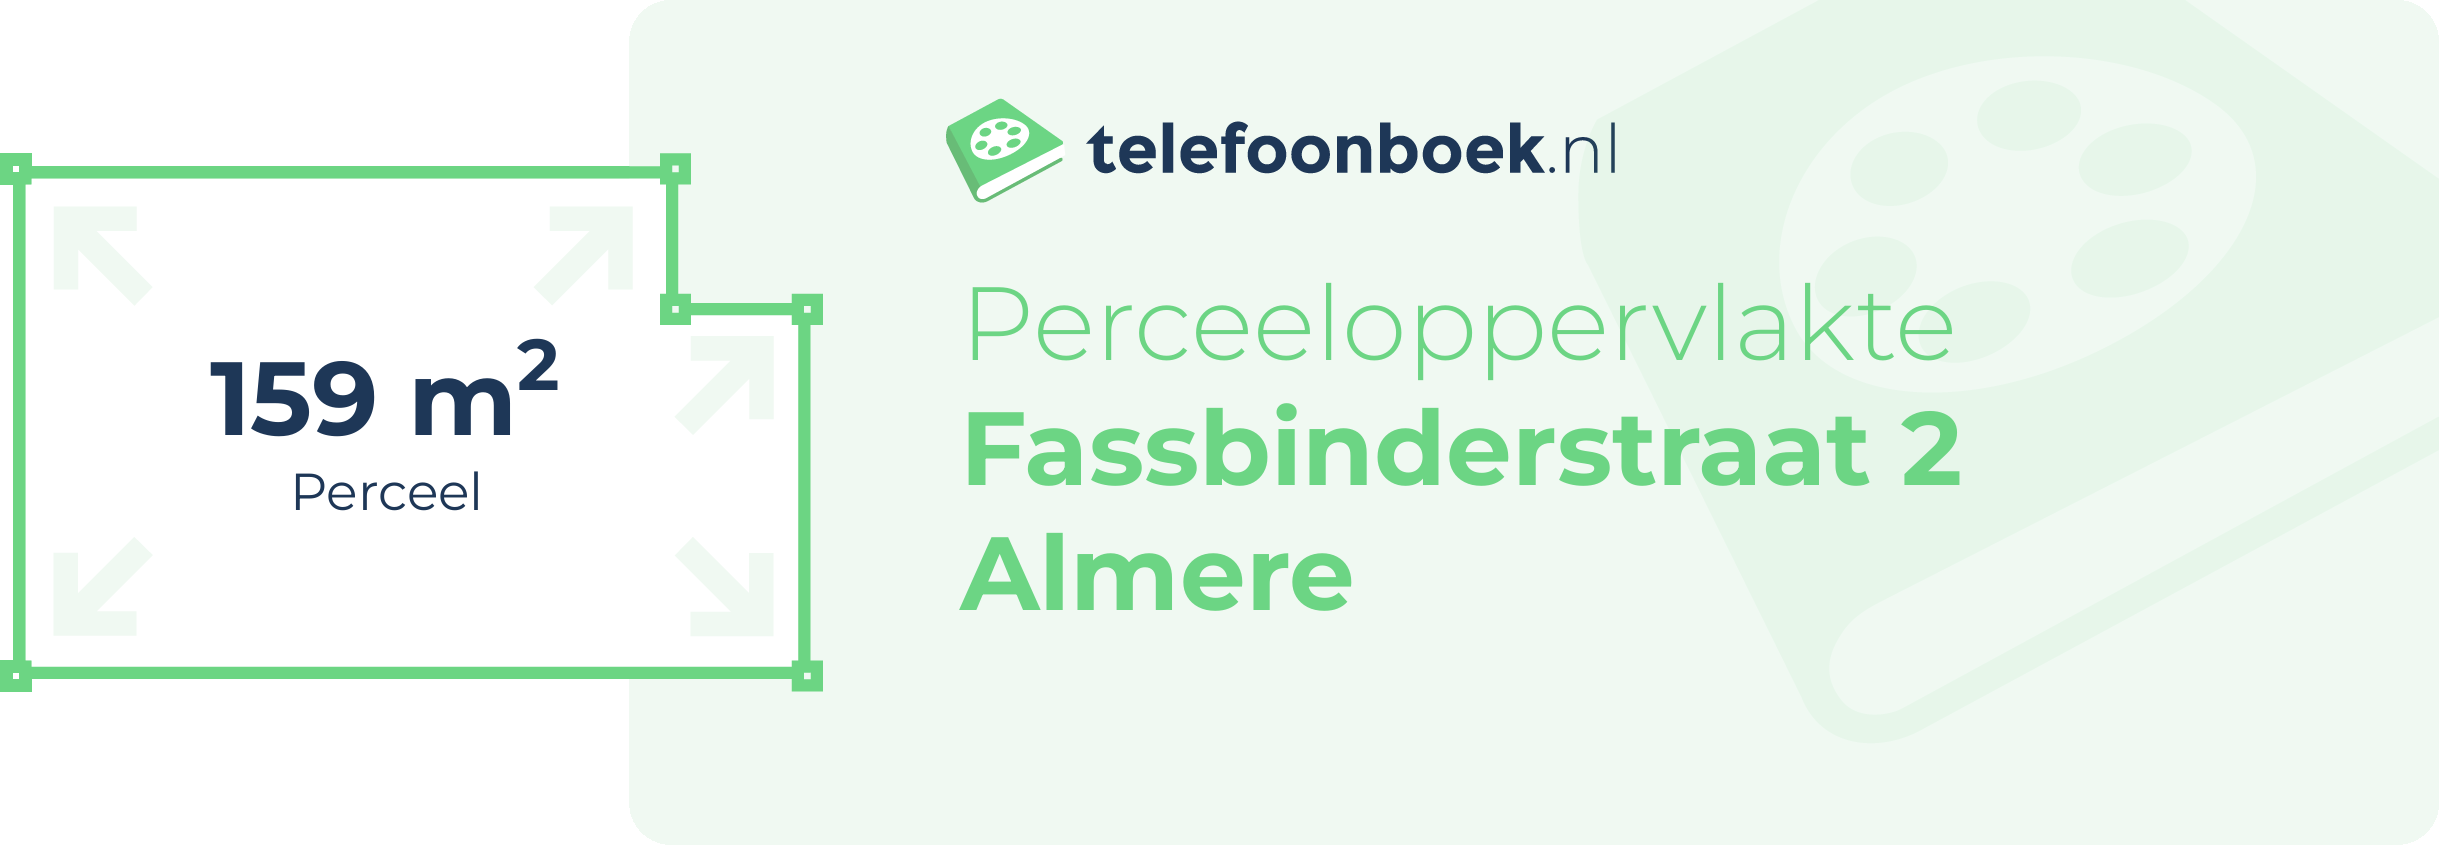 Perceeloppervlakte Fassbinderstraat 2 Almere